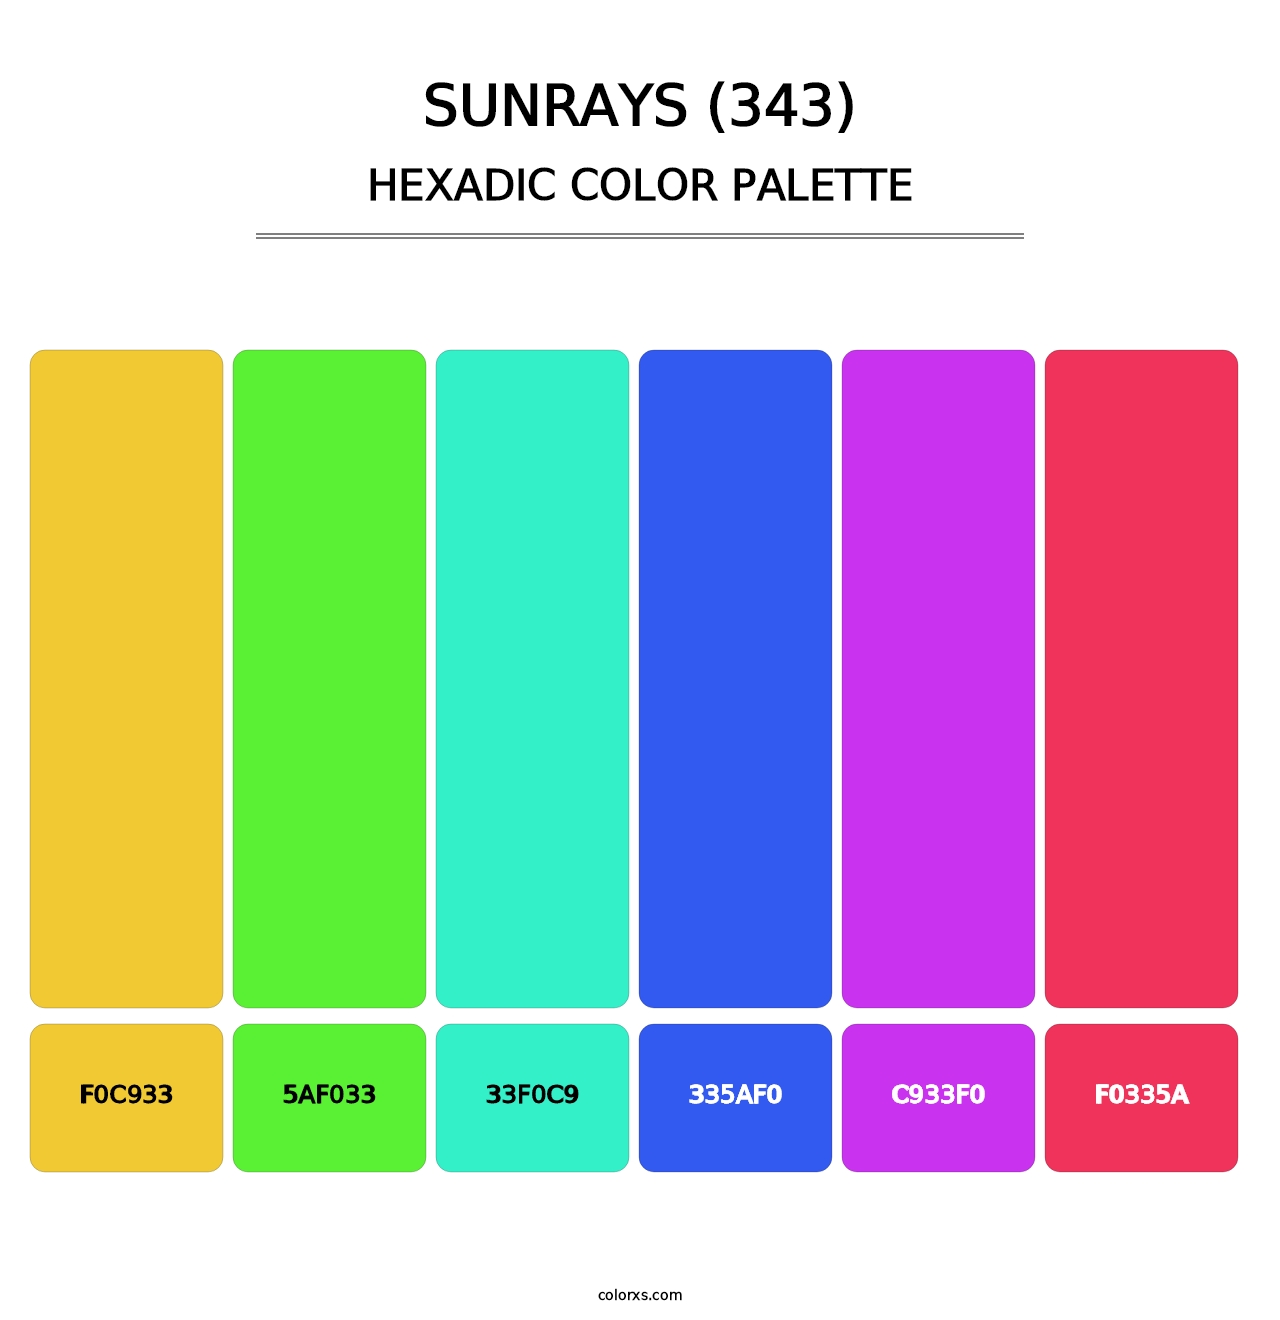 Sunrays (343) - Hexadic Color Palette